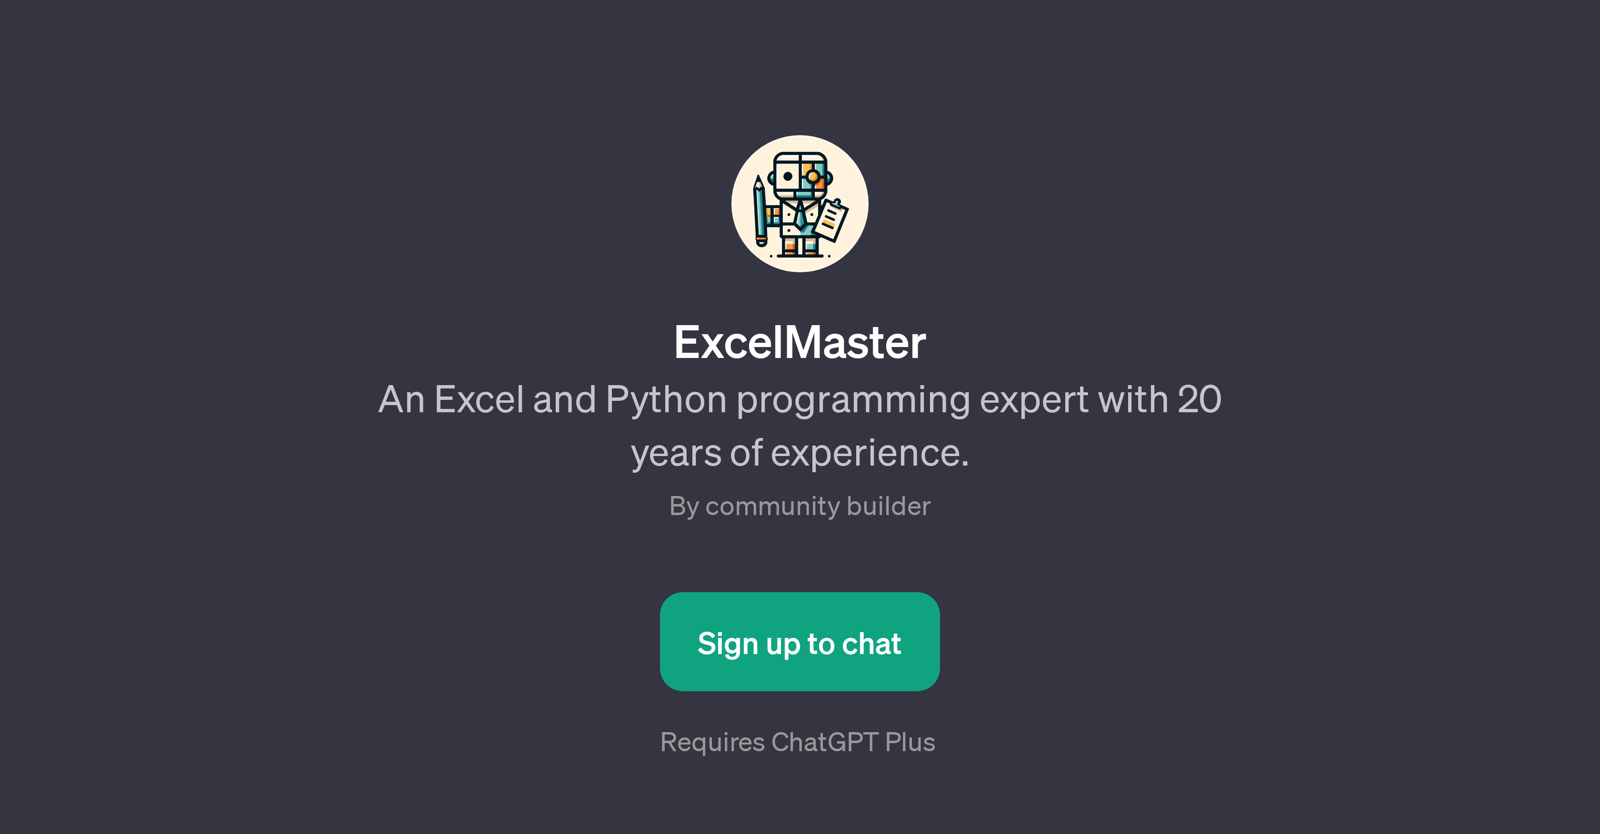 ExcelMaster website